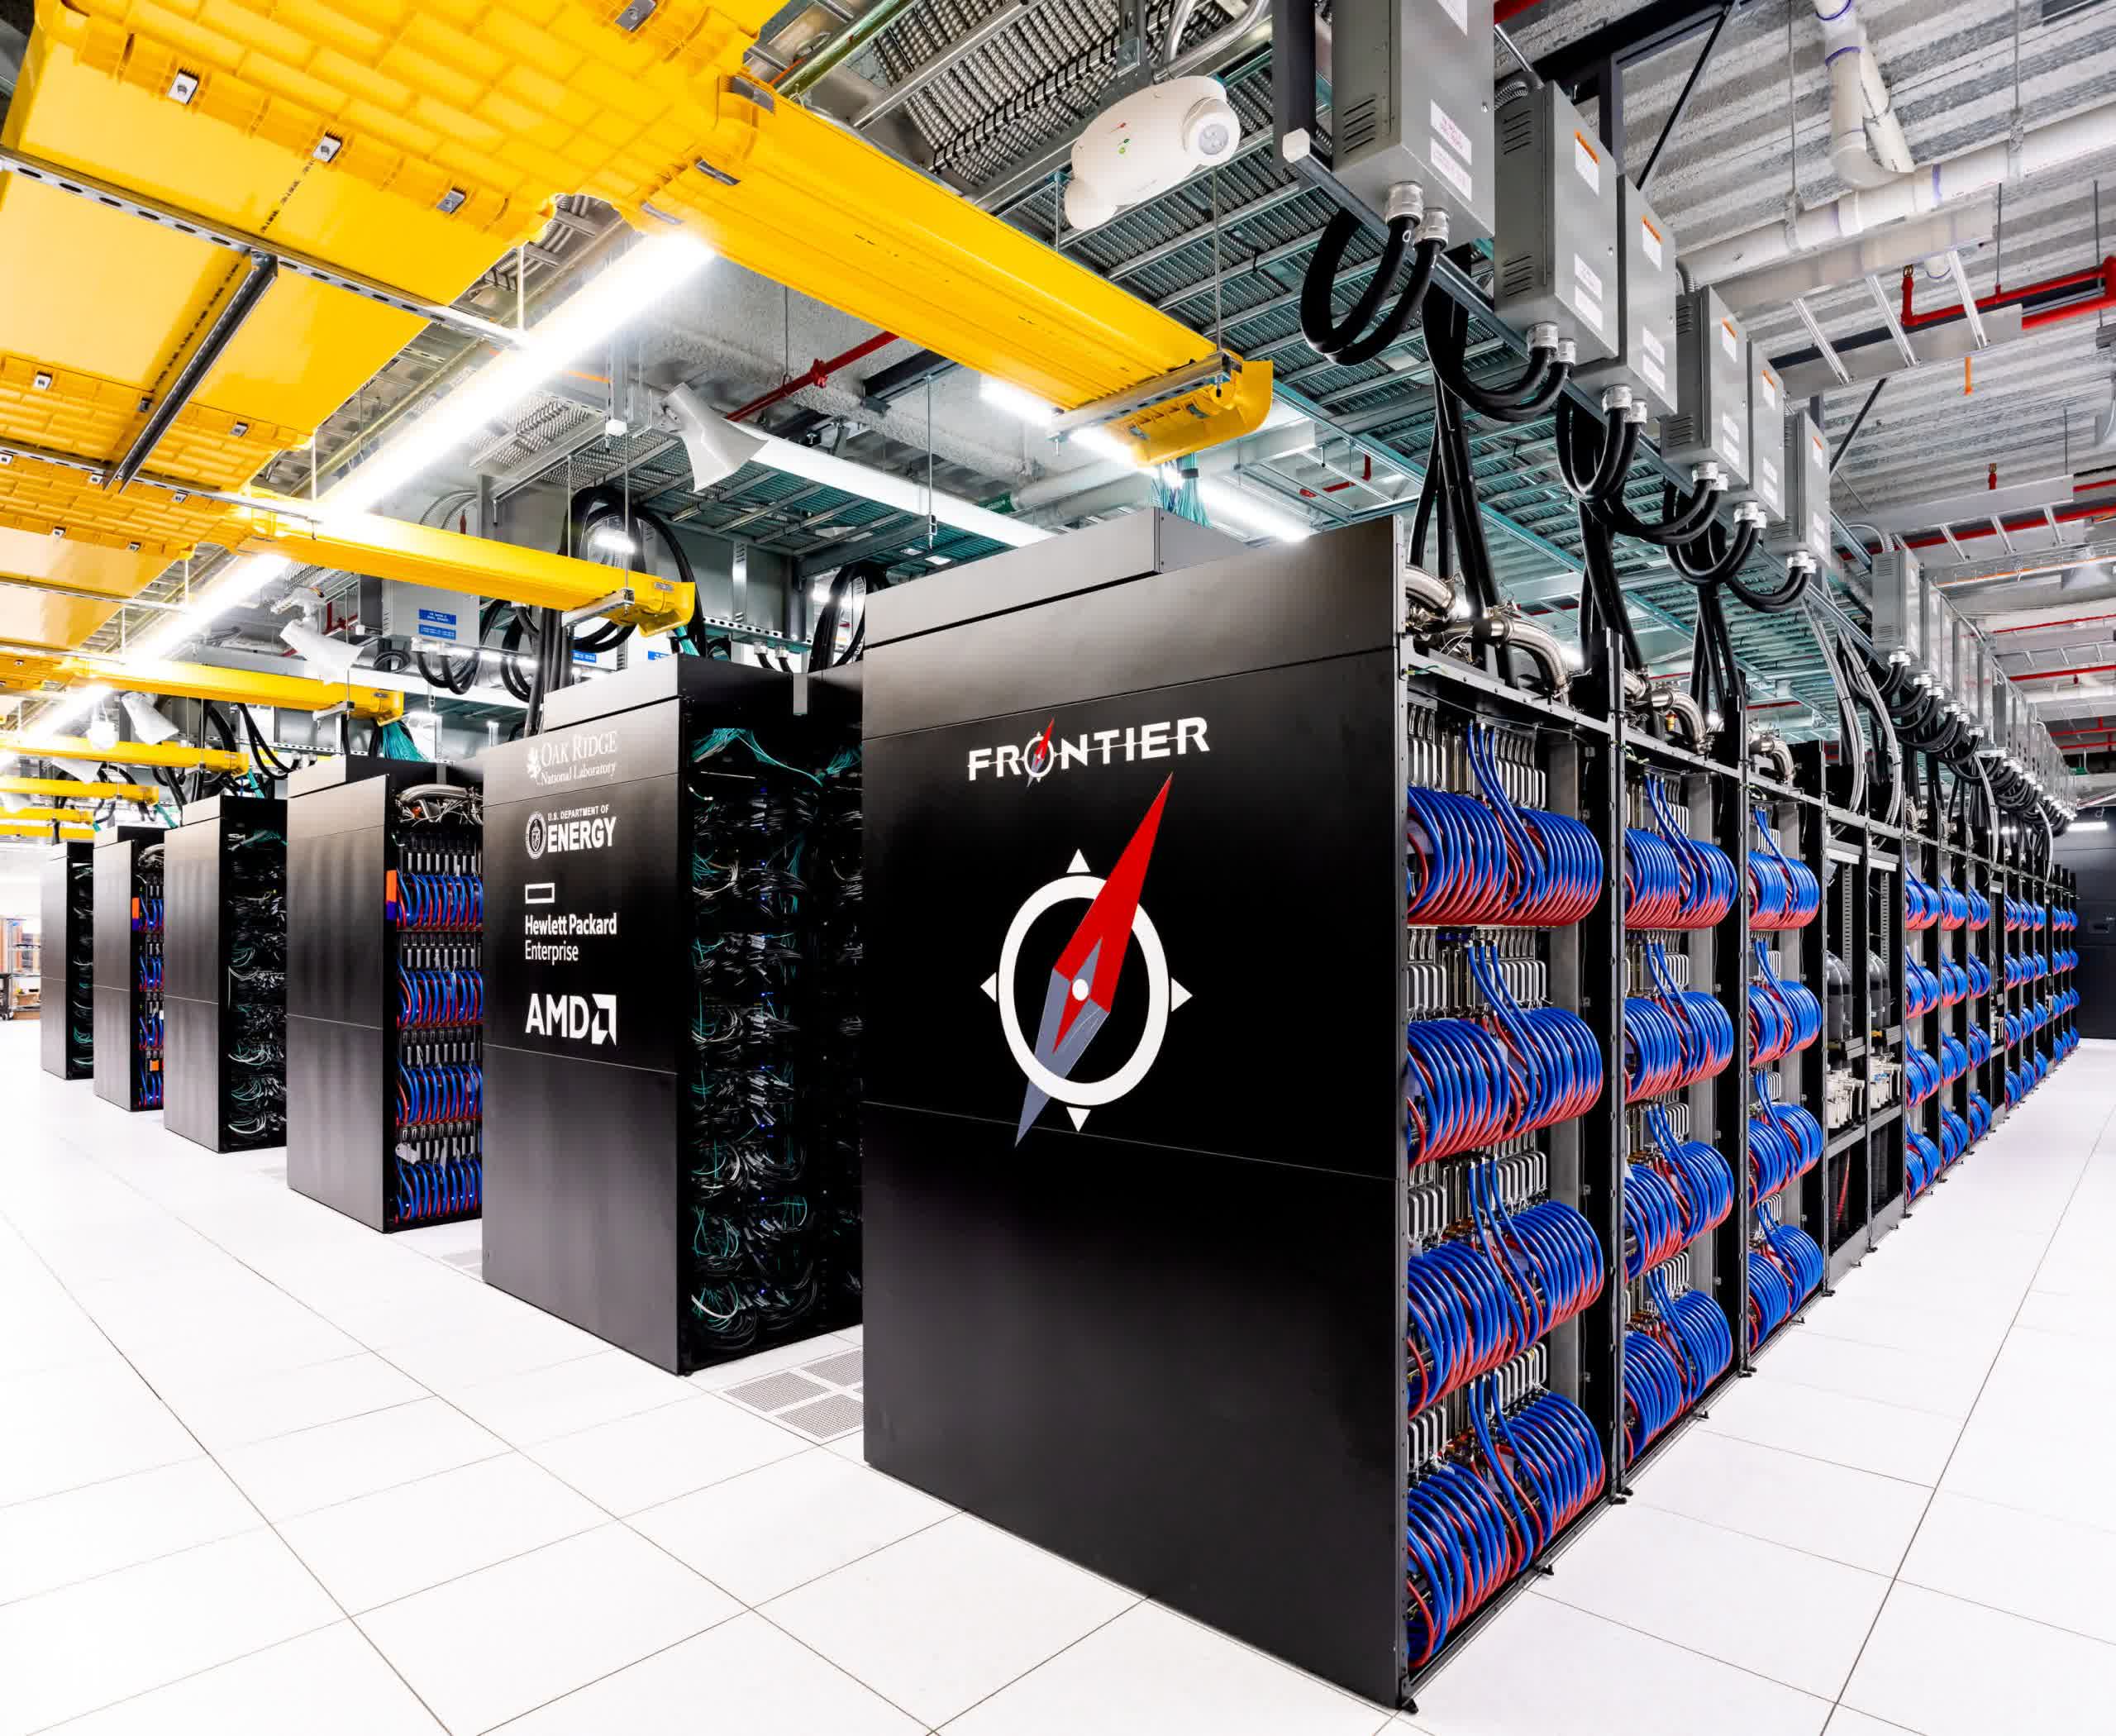 AMD approached to make world's fastest AI supercomputer powered by 1.2 million GPU